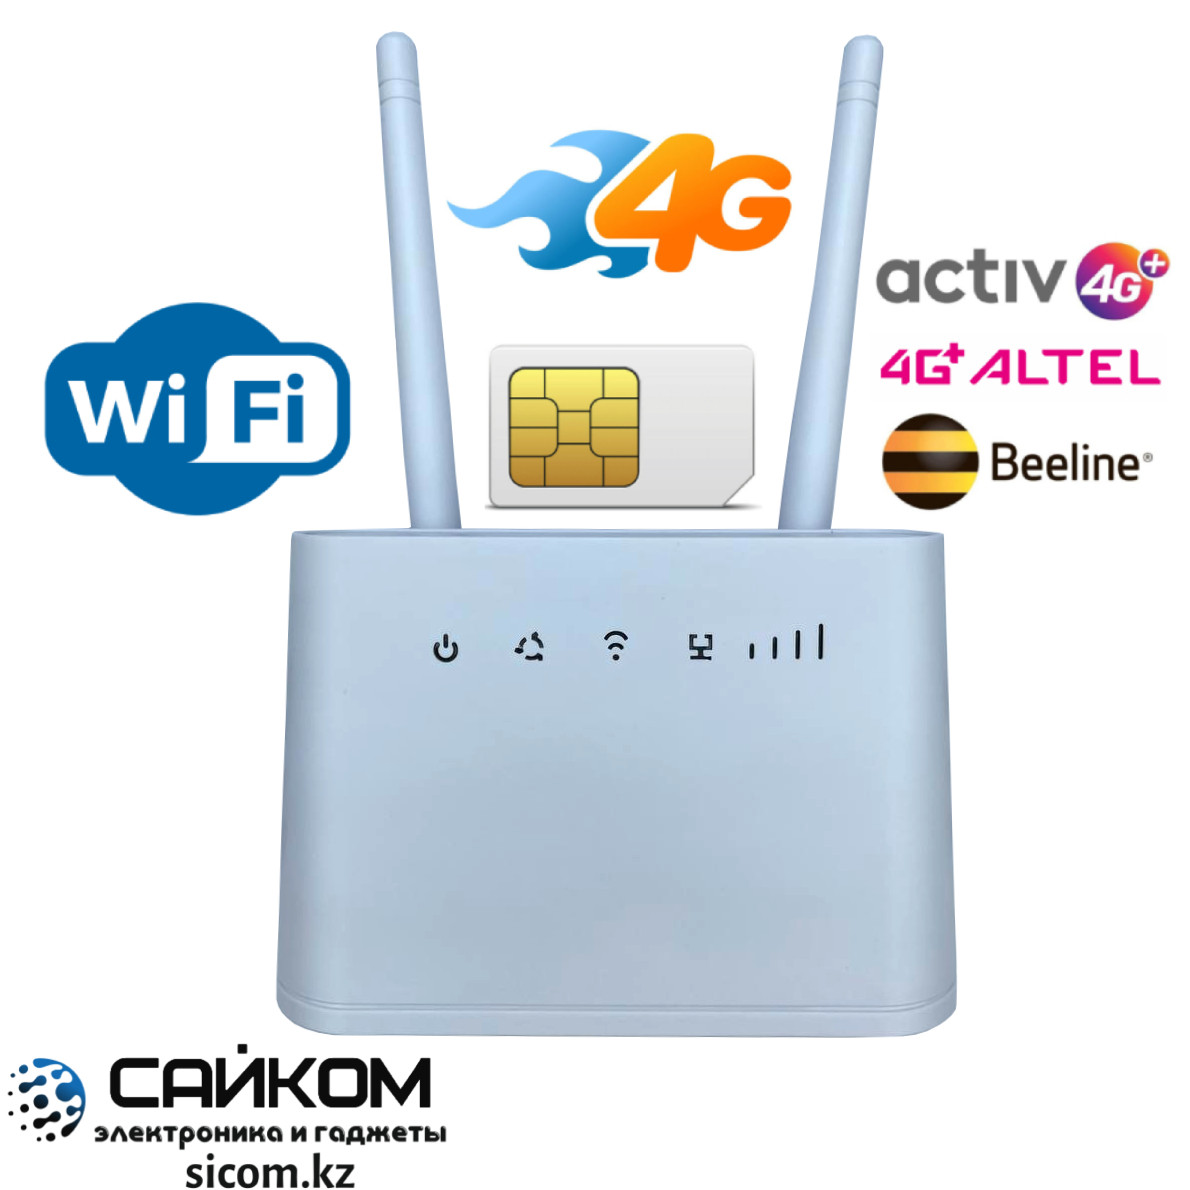 4G LTE Wi-Fi Wireless Роутер EIUC2K, Работает от SIM карты, фото 1